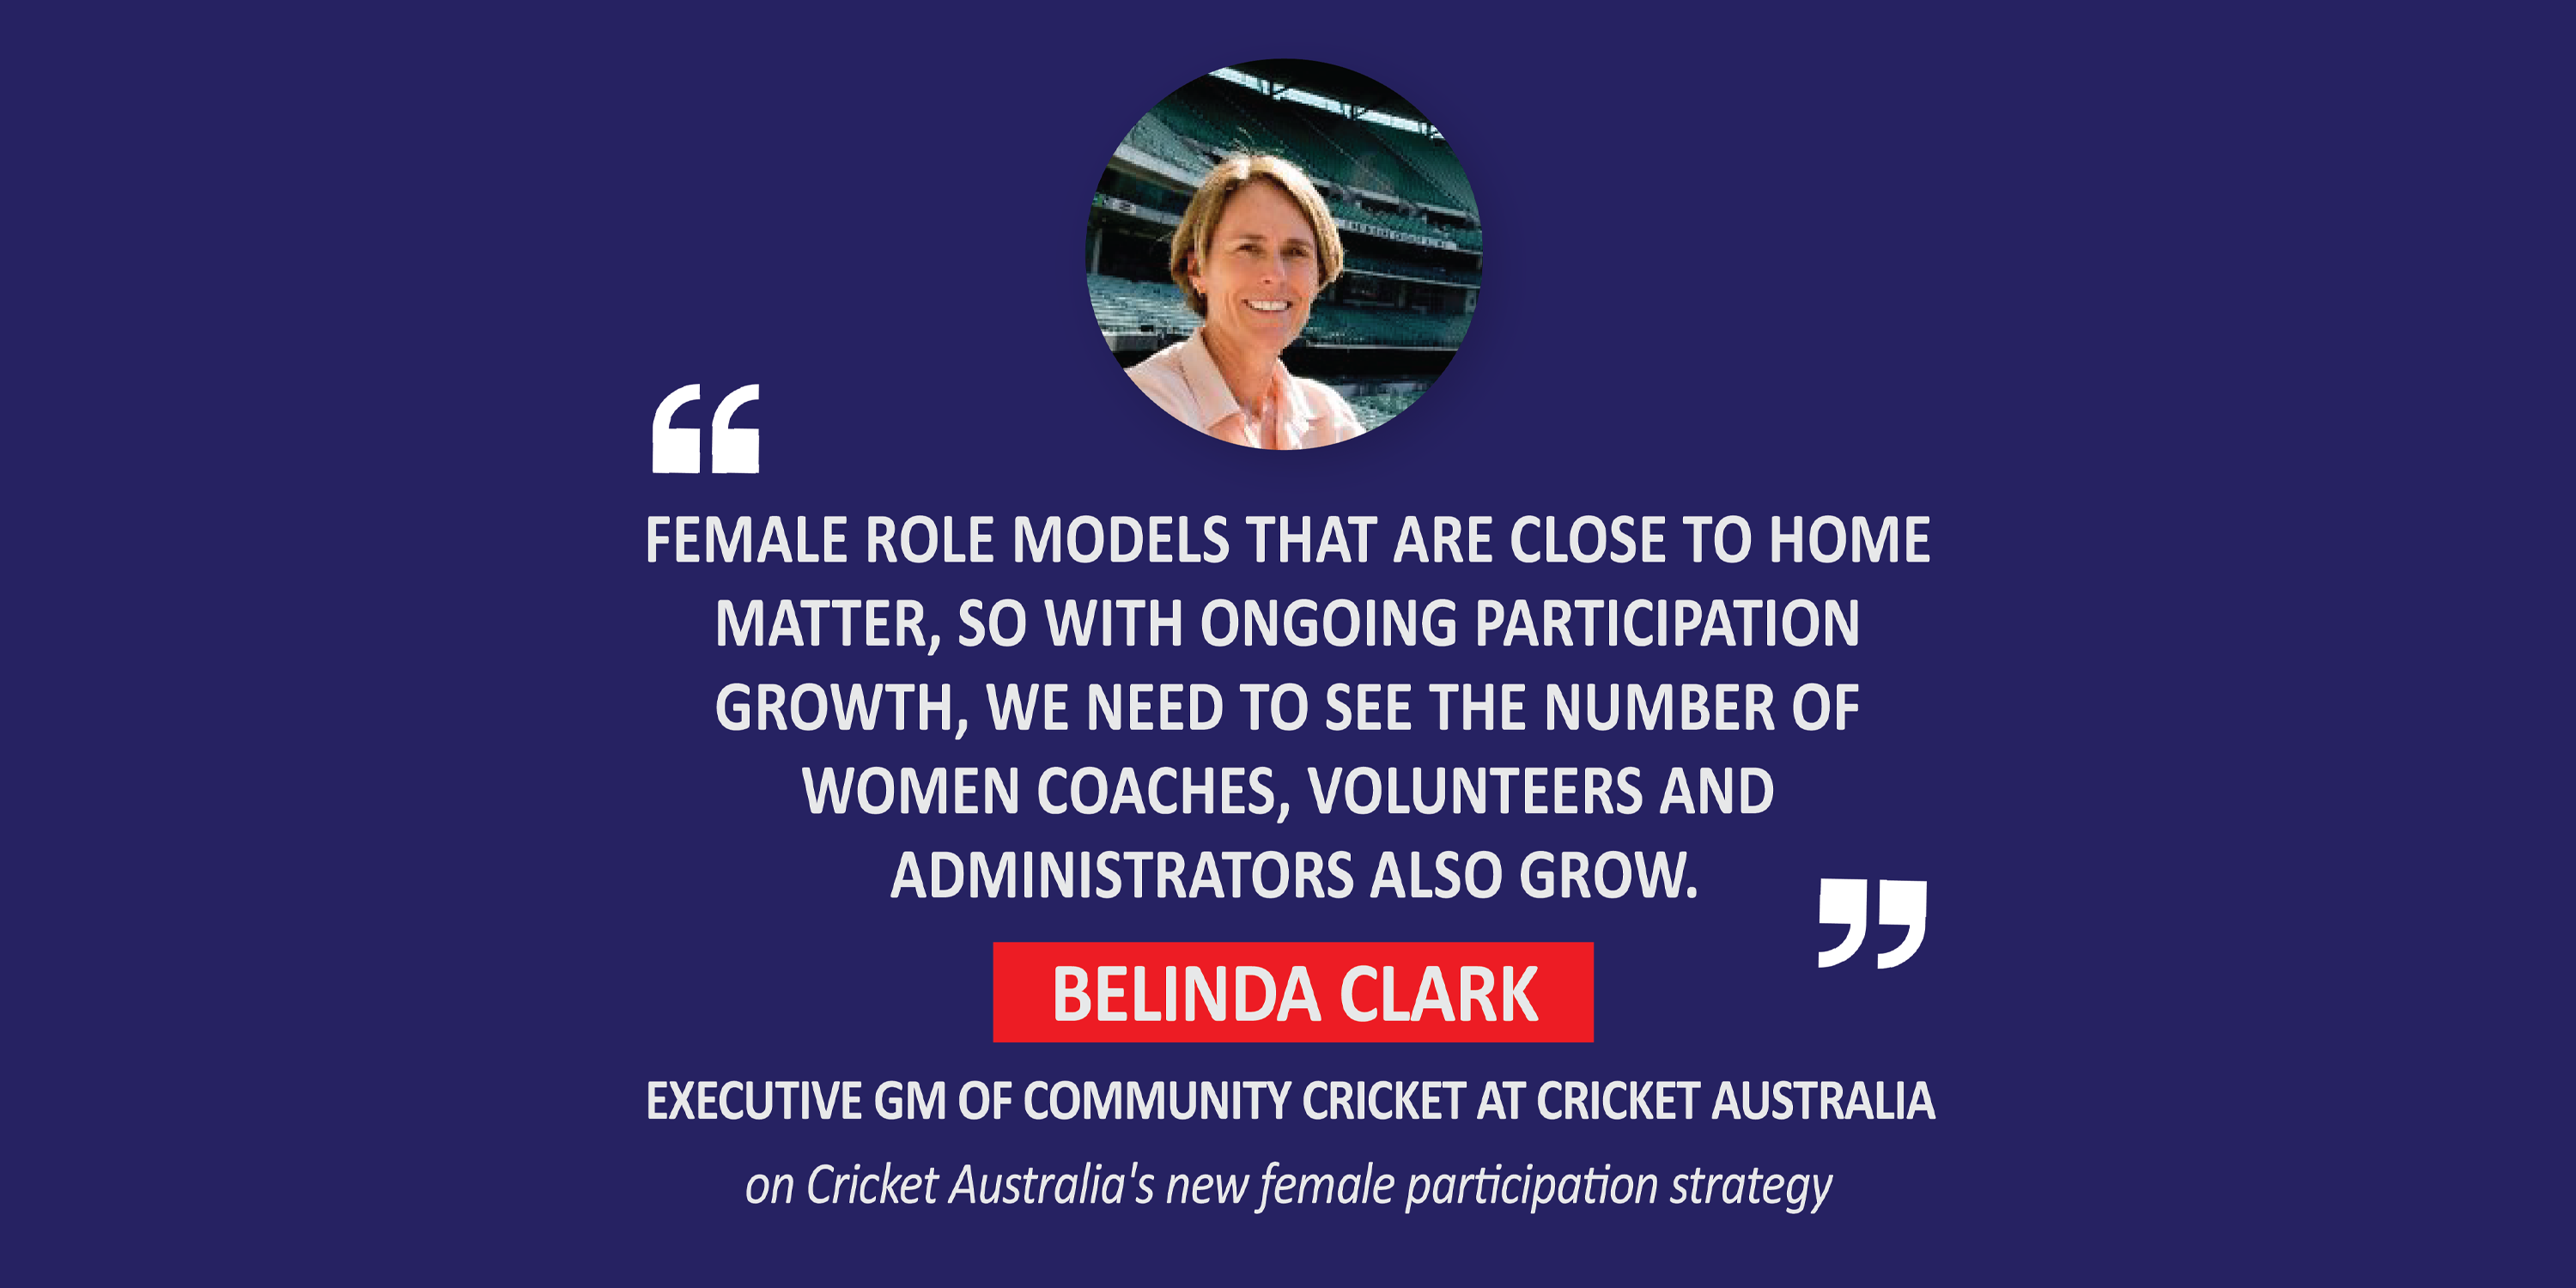 Belinda Clark, Executive General Manager, Community Cricket at Cricket Australia on Cricket Australia's new female participation strategy